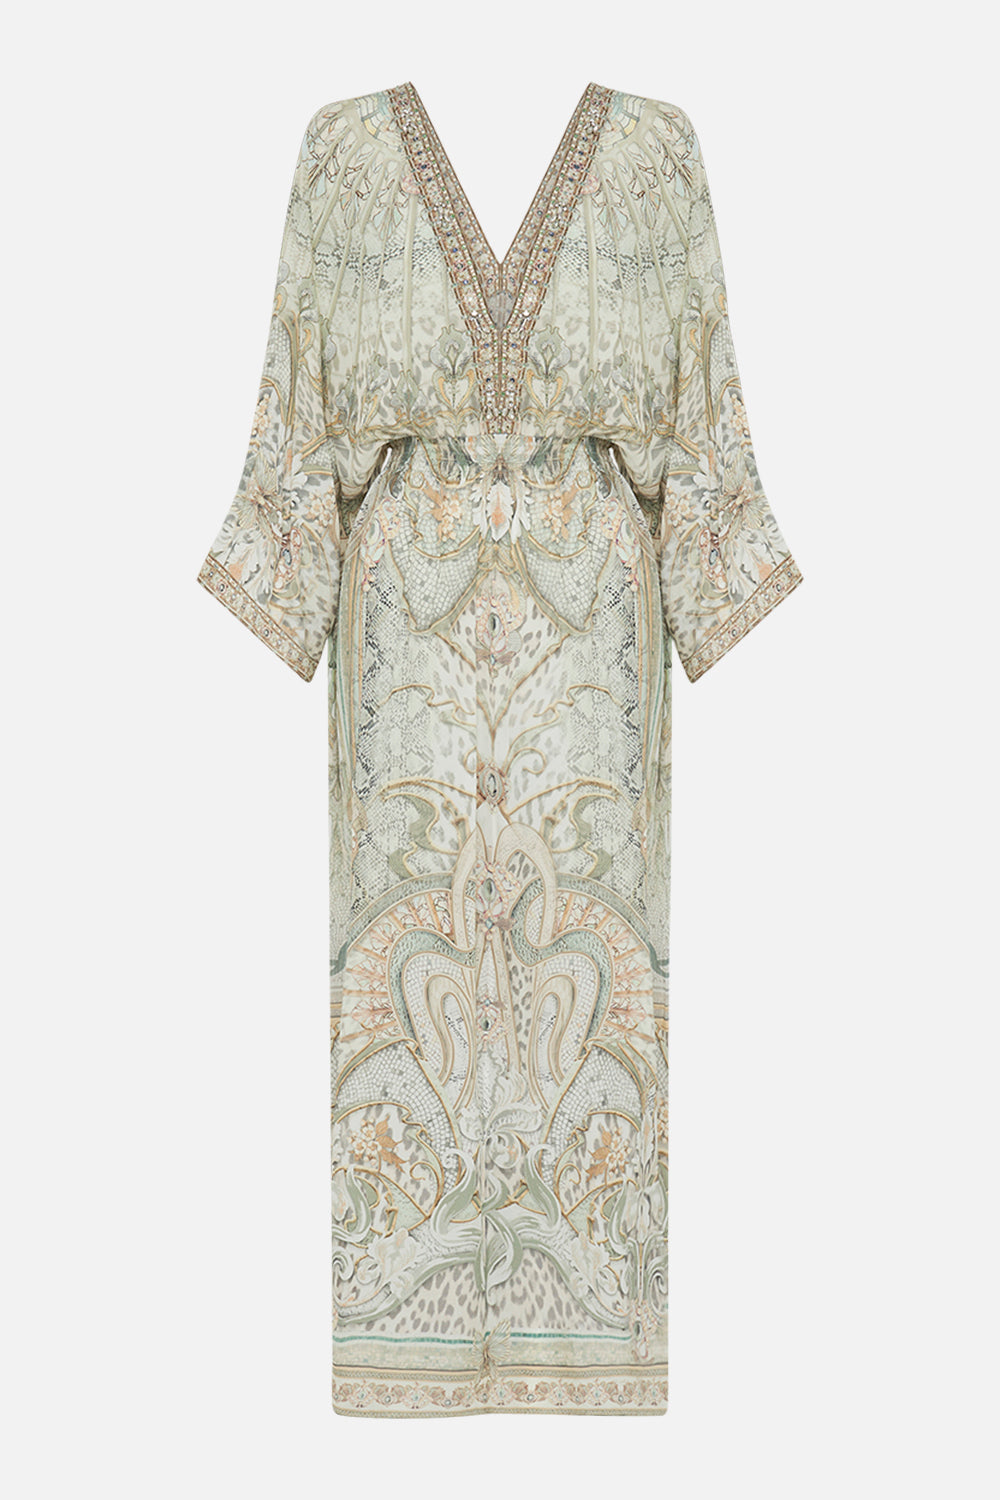 CAMILLA maxi dress in Ivory Tower Tales print